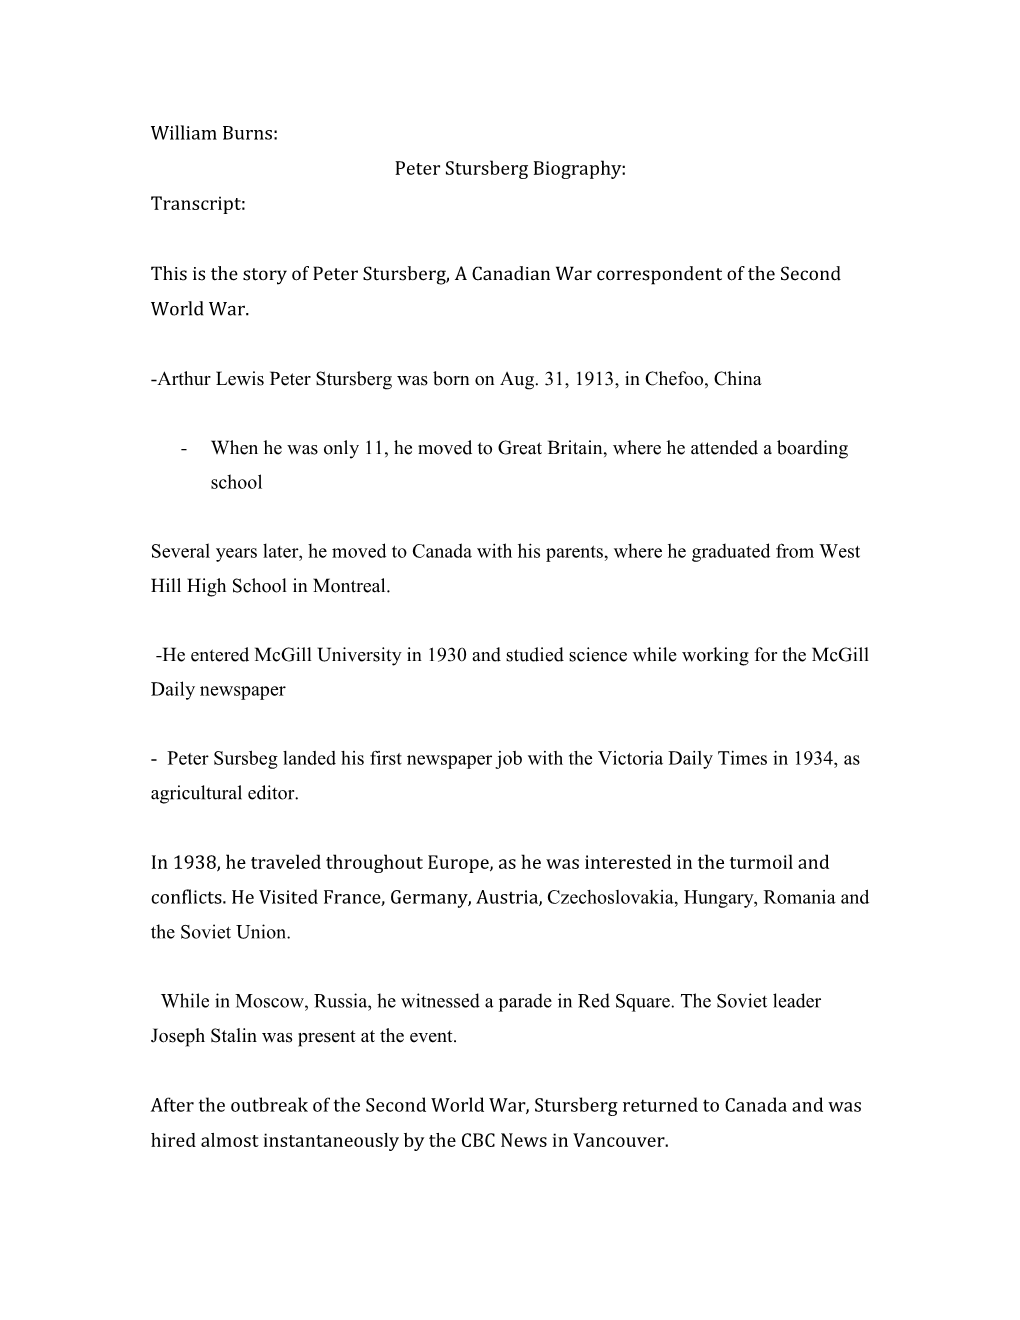 William Burns: Peter Stursberg Biography: Transcript